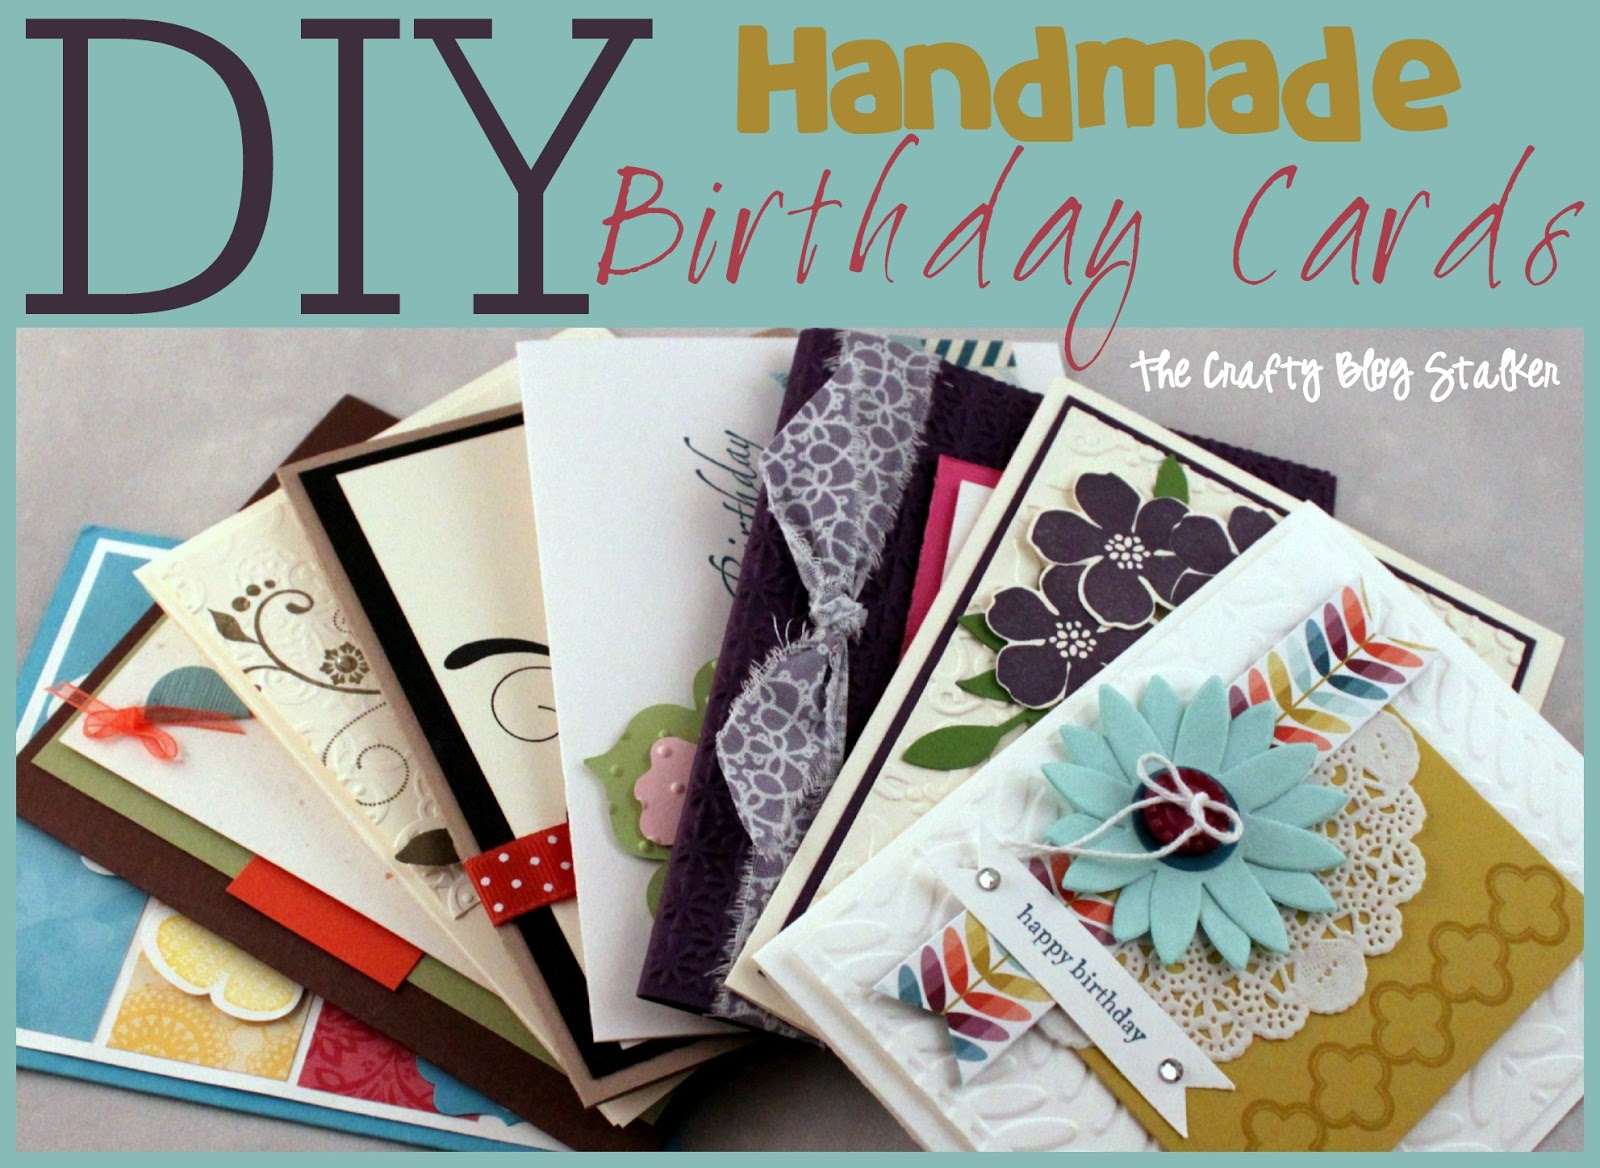 Card Making Ideas Birthday Handmade Birthday Card Ideas The Crafty Blog Stalker